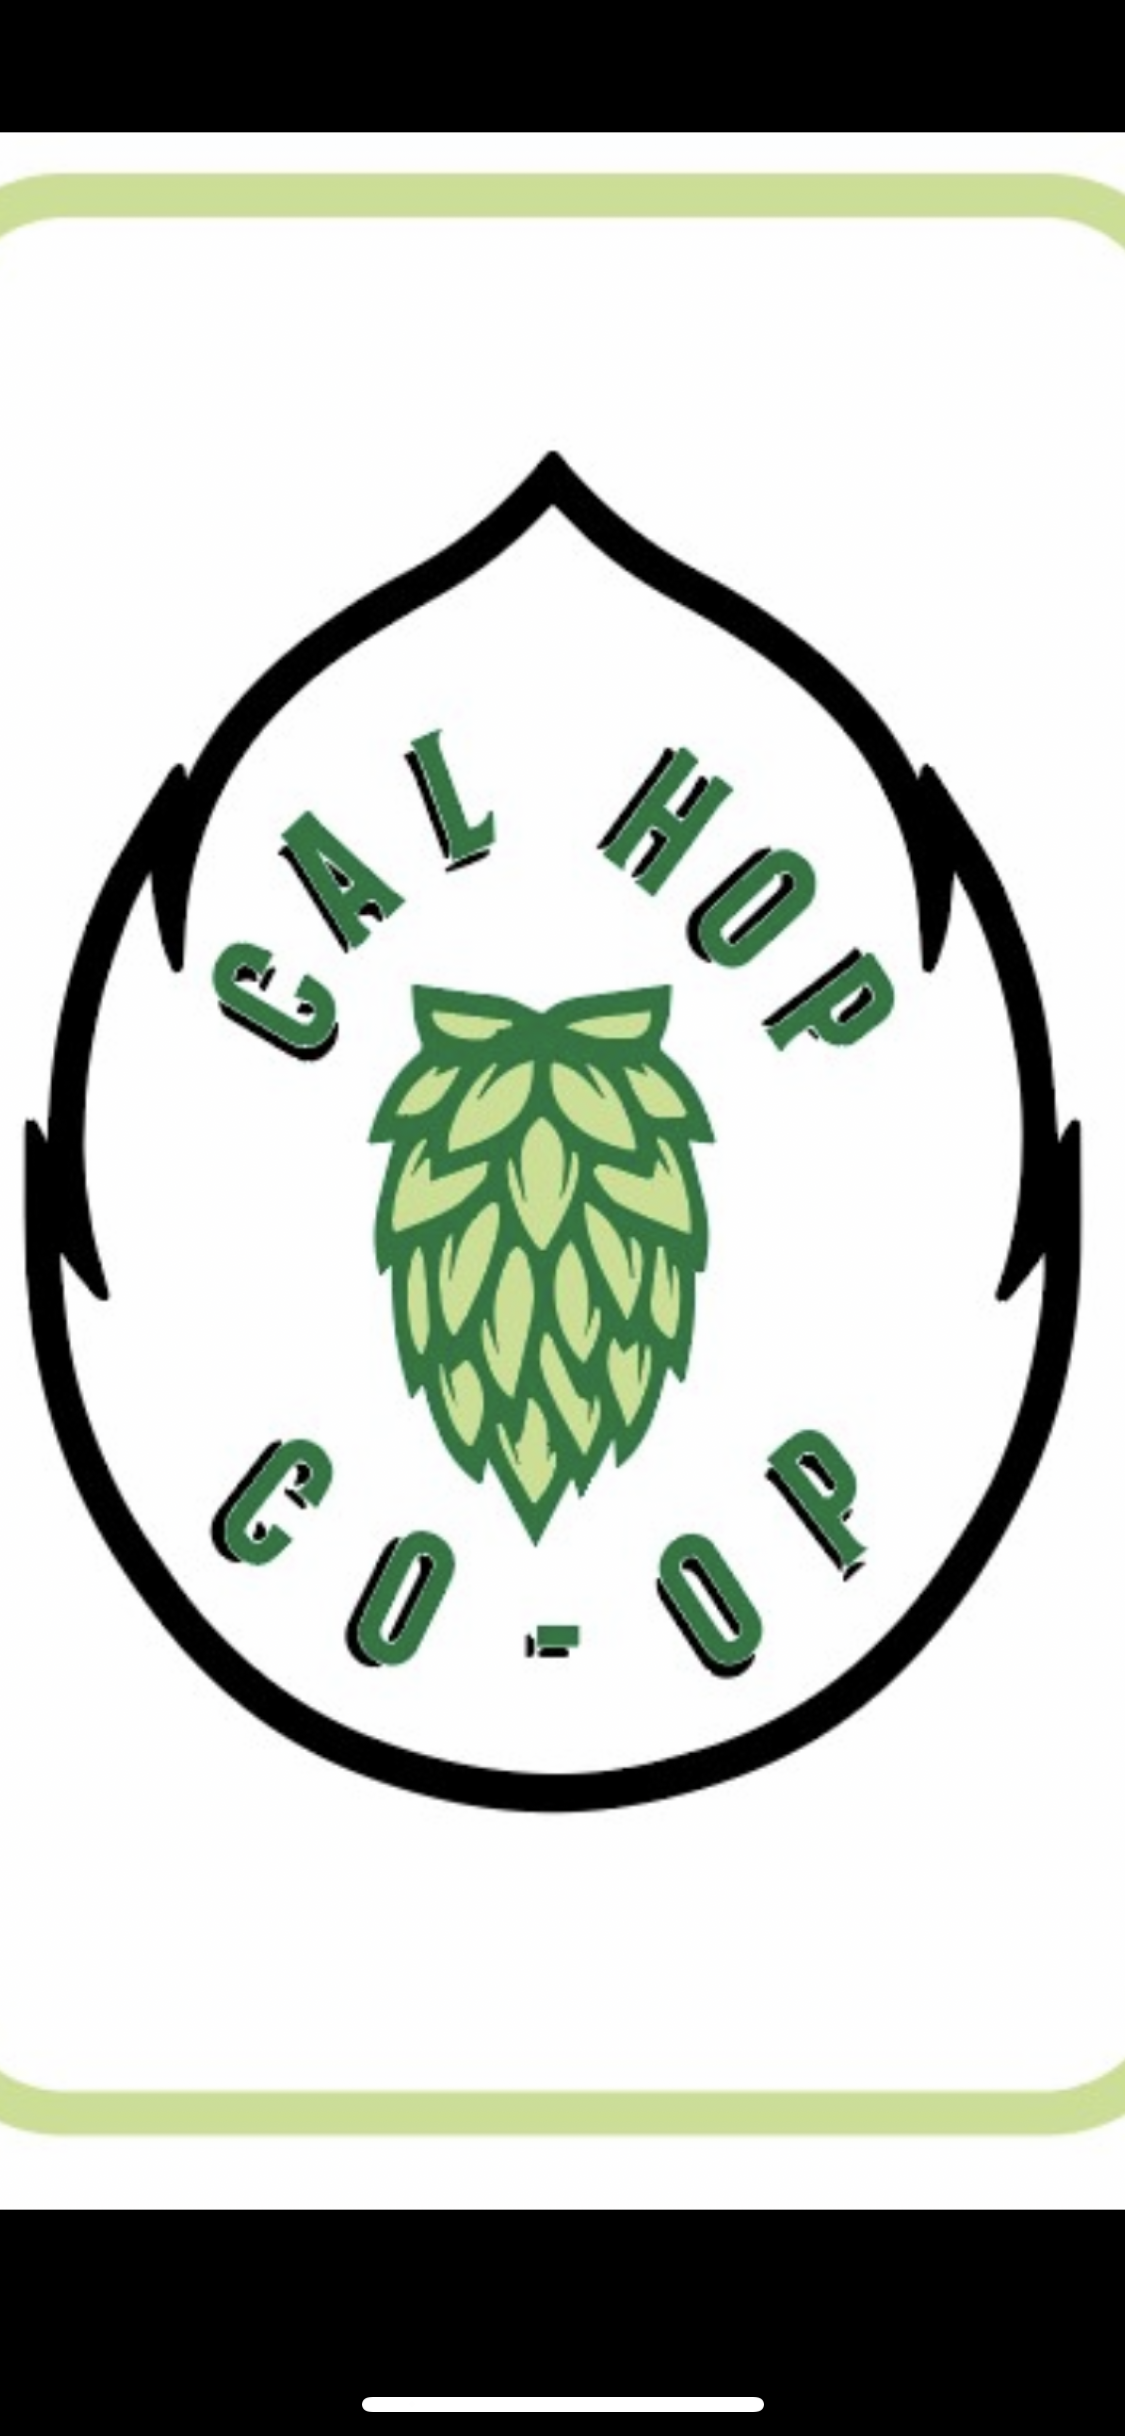 California Hop Cooperative 